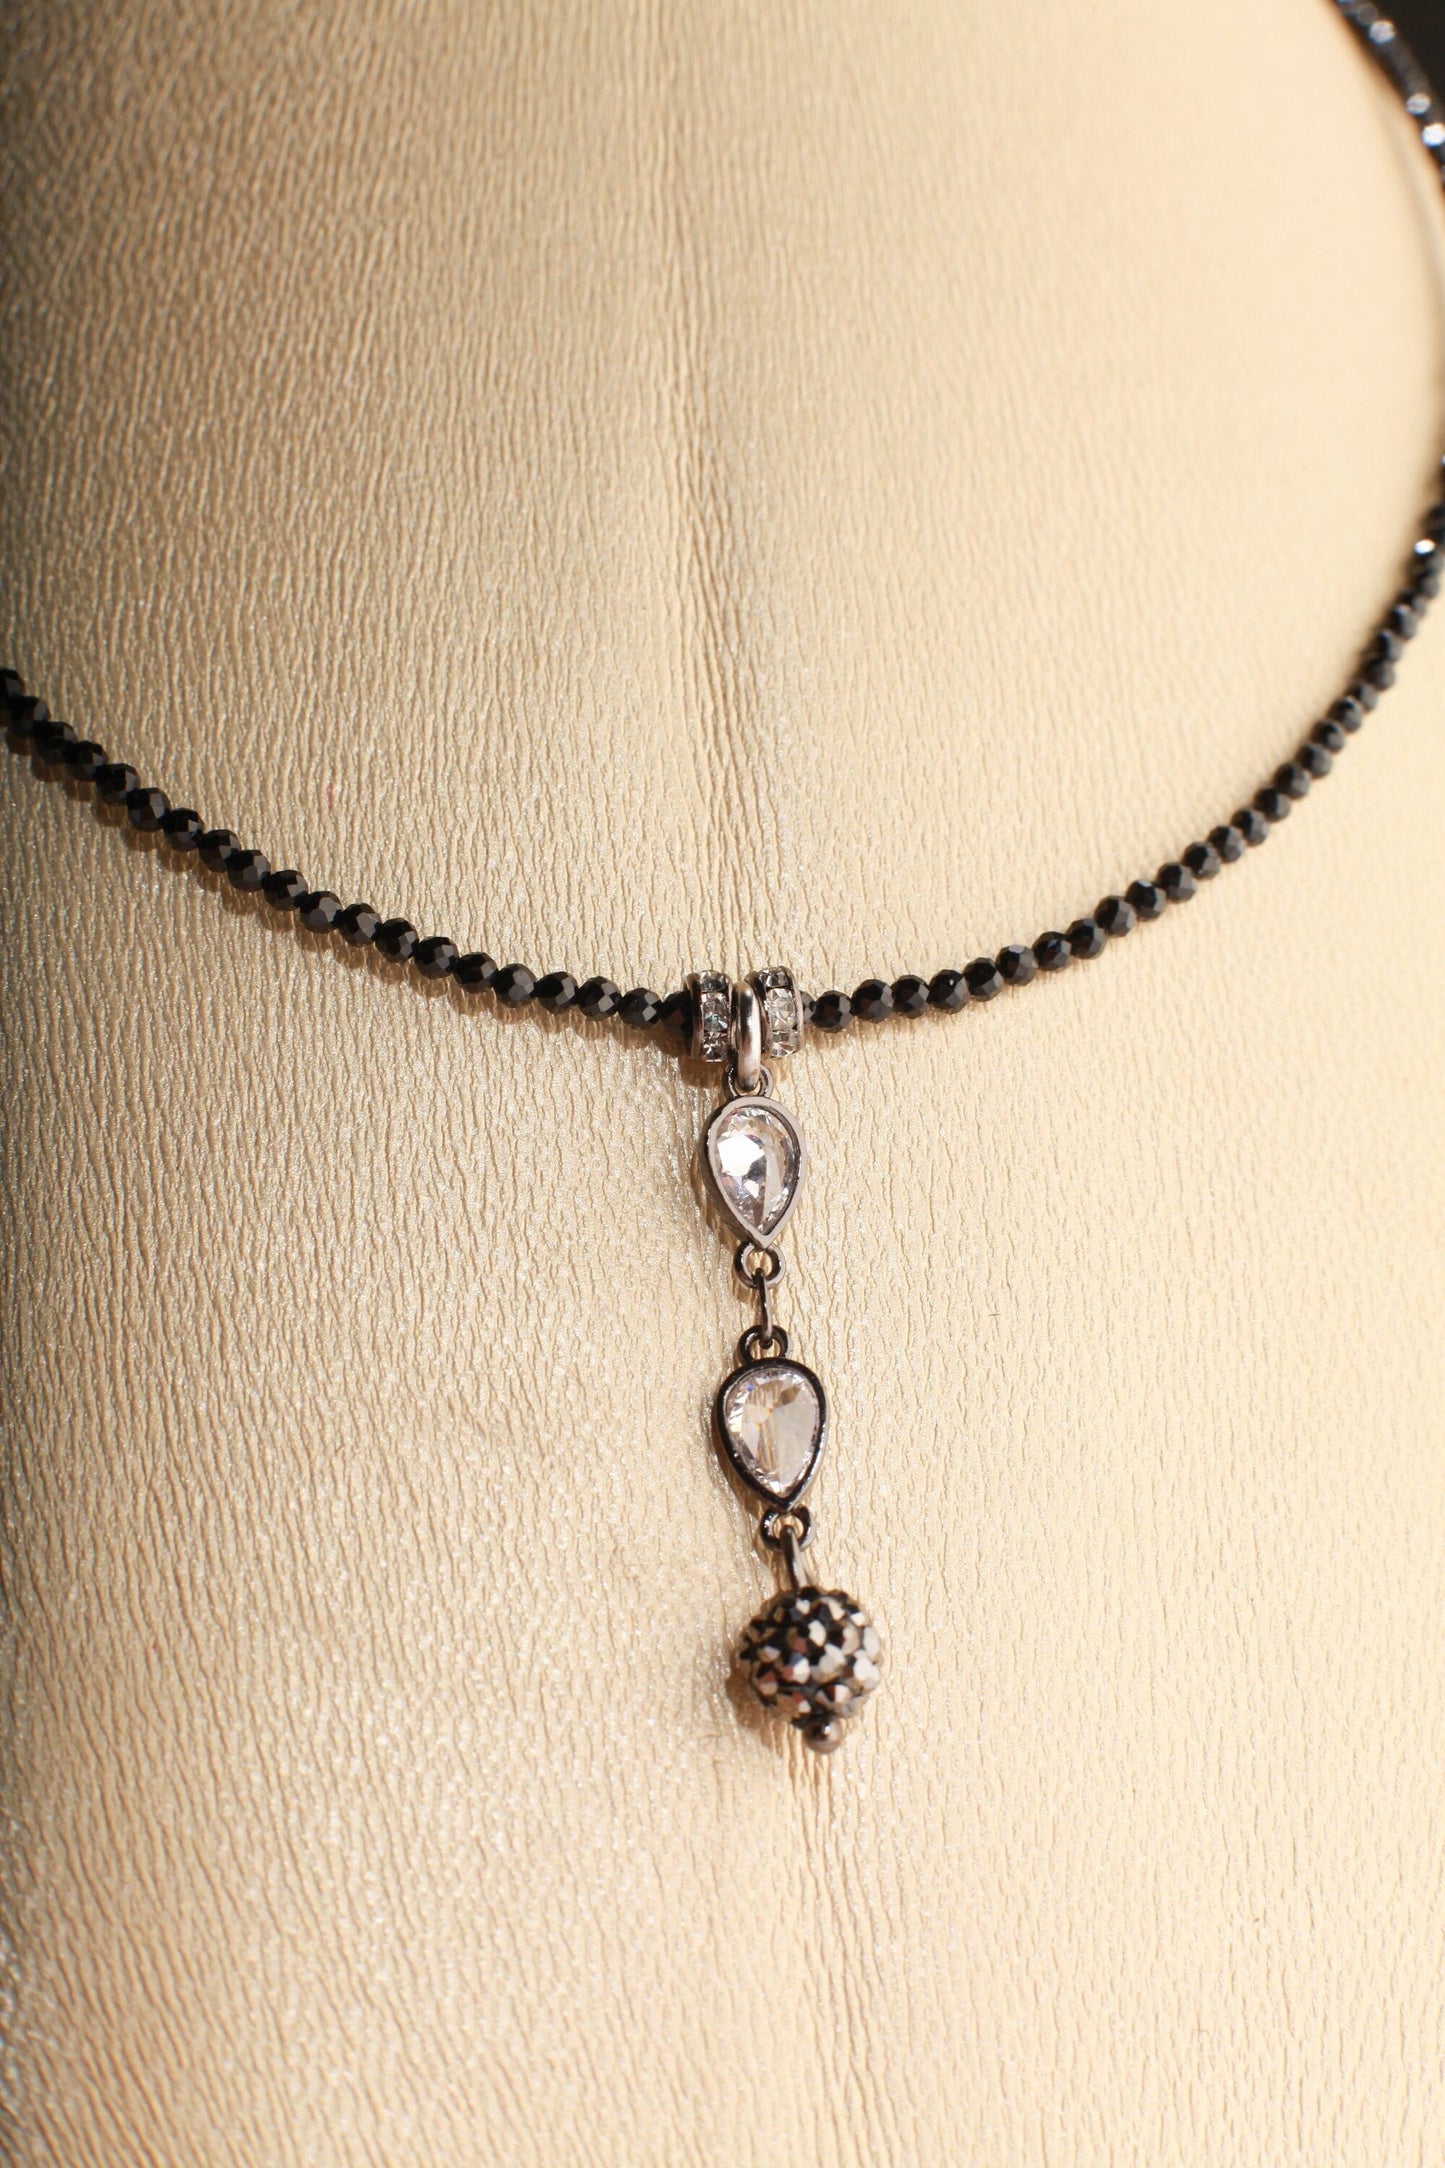 Black Spinel Diamond Cut Choker Necklace with Cubic Zirconia Oxidized Teardrop and Rhinestone Black Diamond Ball Pendant Extendable Necklace